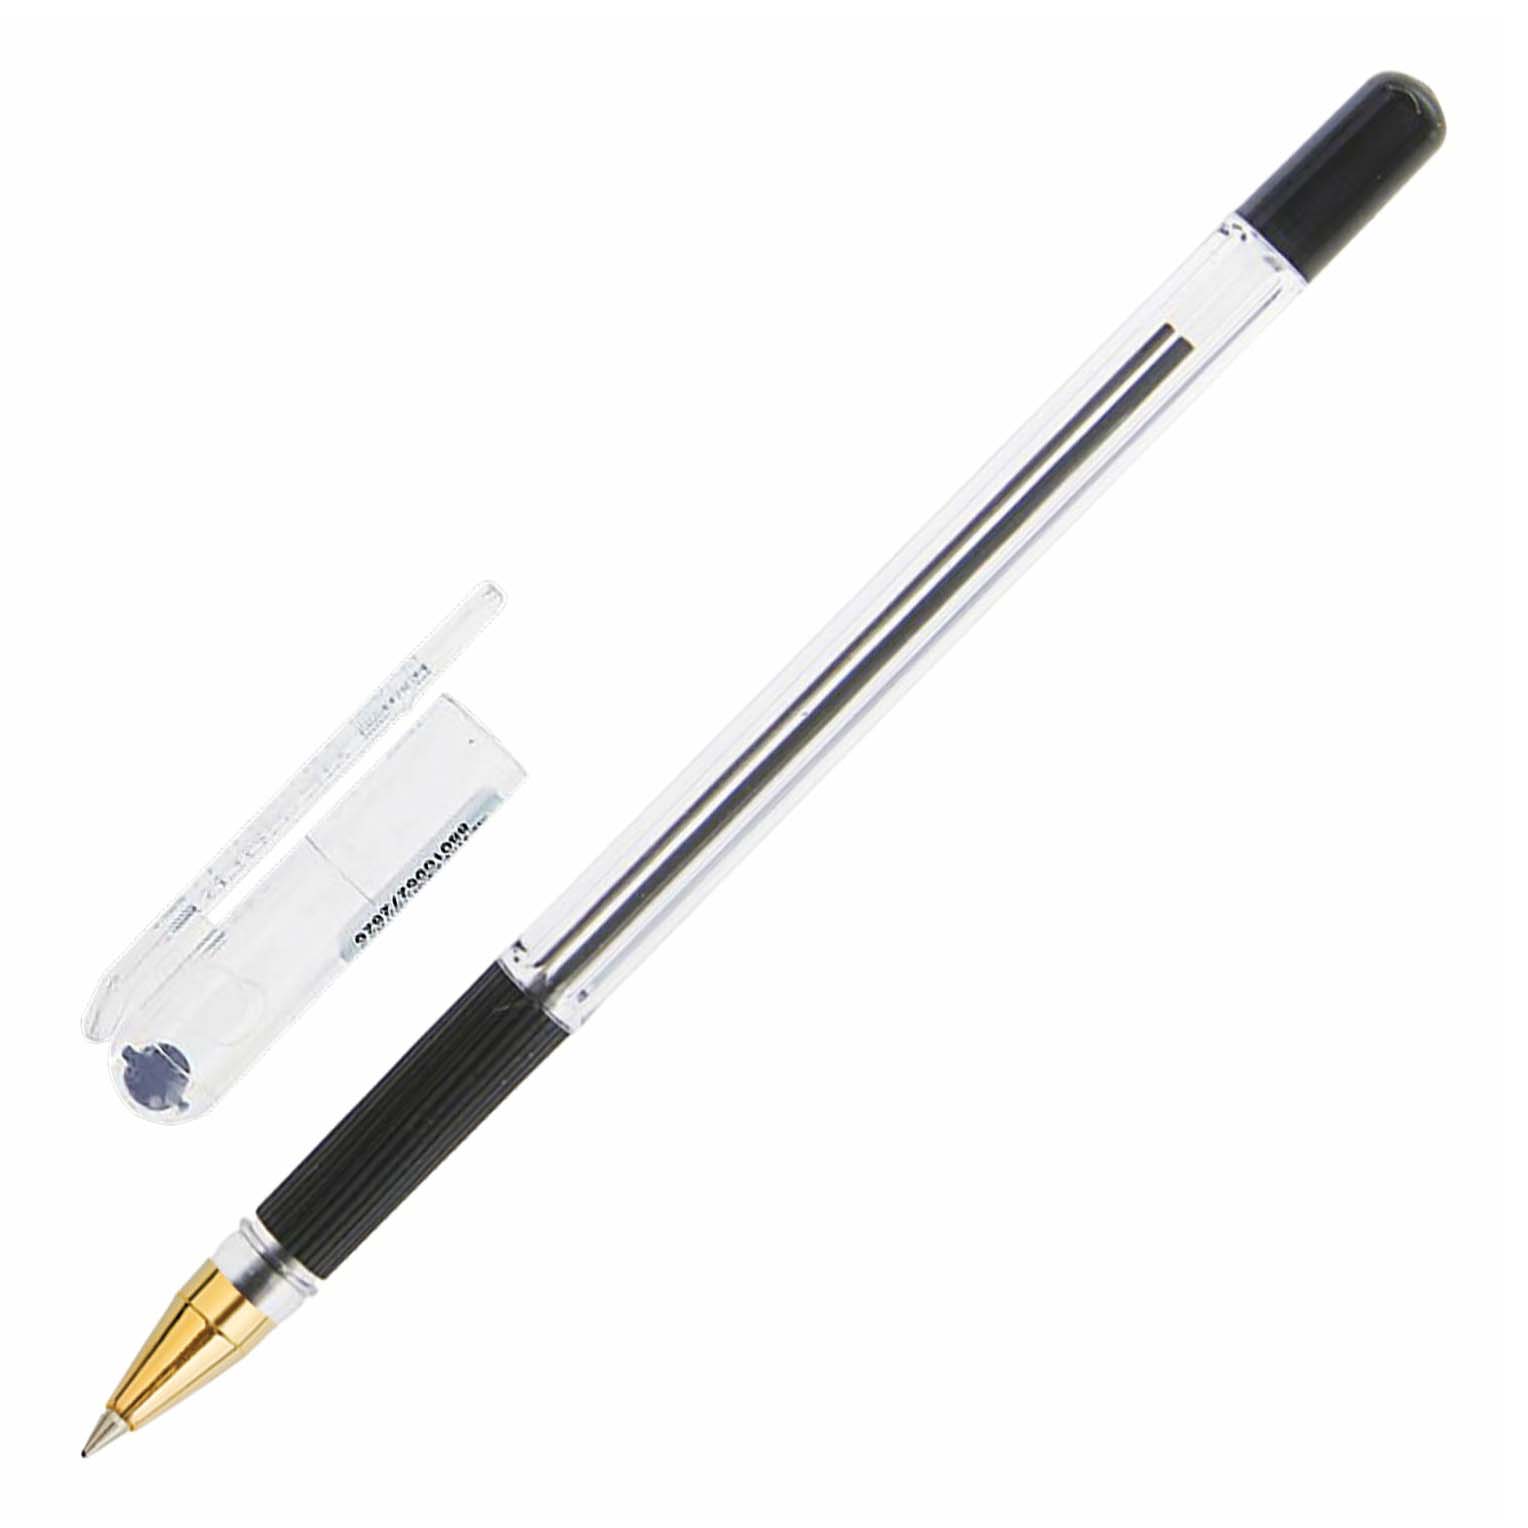 Mc gold ручка. MUNHWA ручка шариковая MC Gold. Ручка MUNHWA MC Gold 0.5. Ручка шариковая MUNHWA MC Gold чёрная 0.5мм. Ручка шариковая масляная MUNHWA MC Gold.